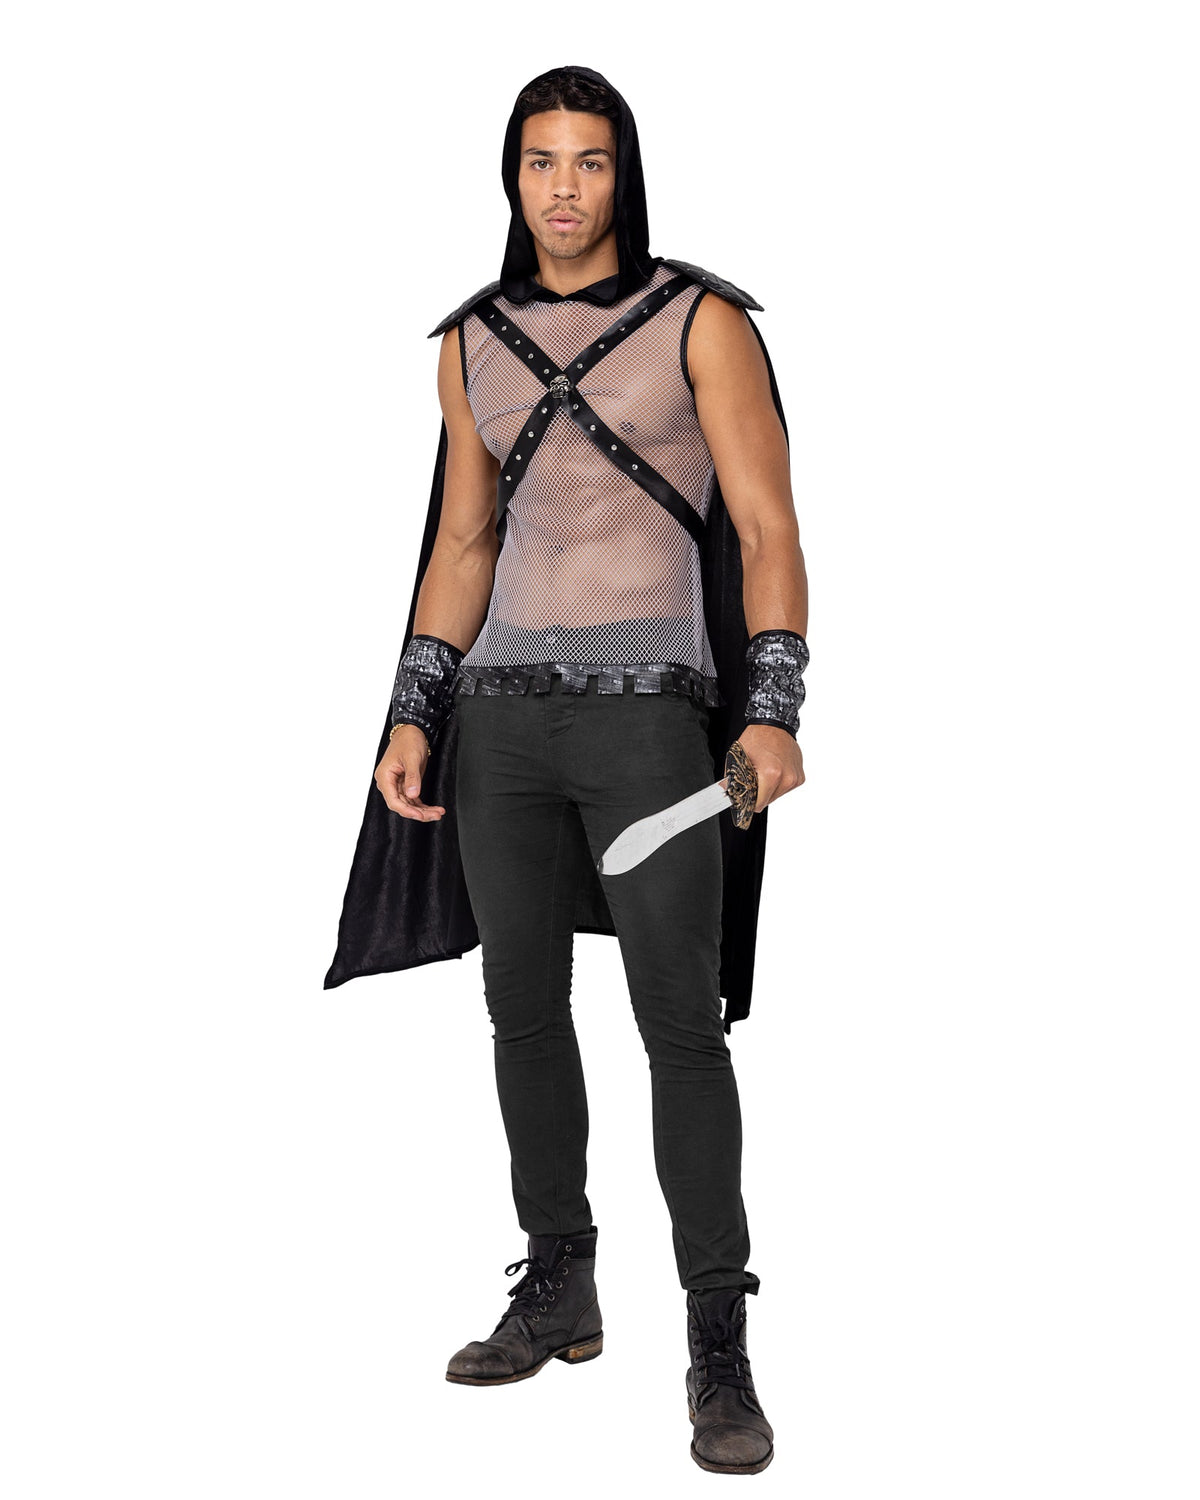 Roma Costume 6166 3PC Mens Dark Realm Warrior